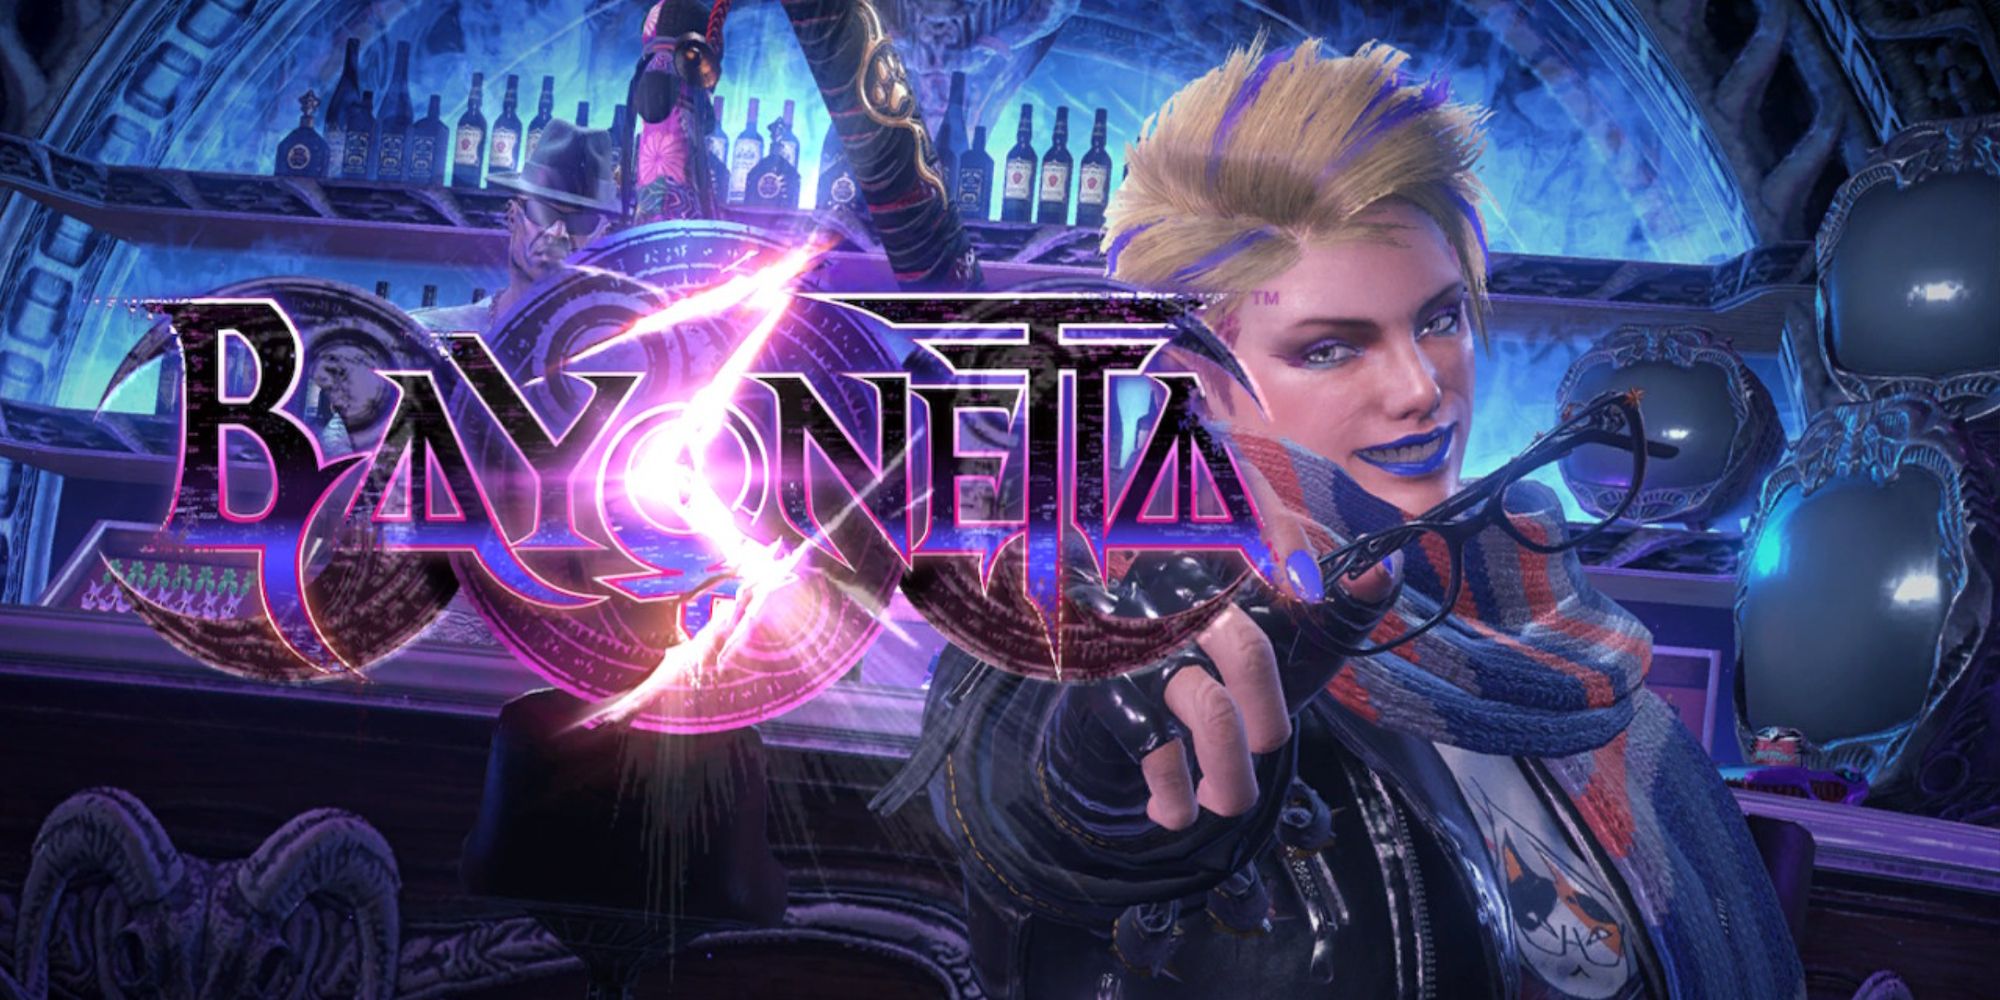 Viola next to the Bayonetta logo